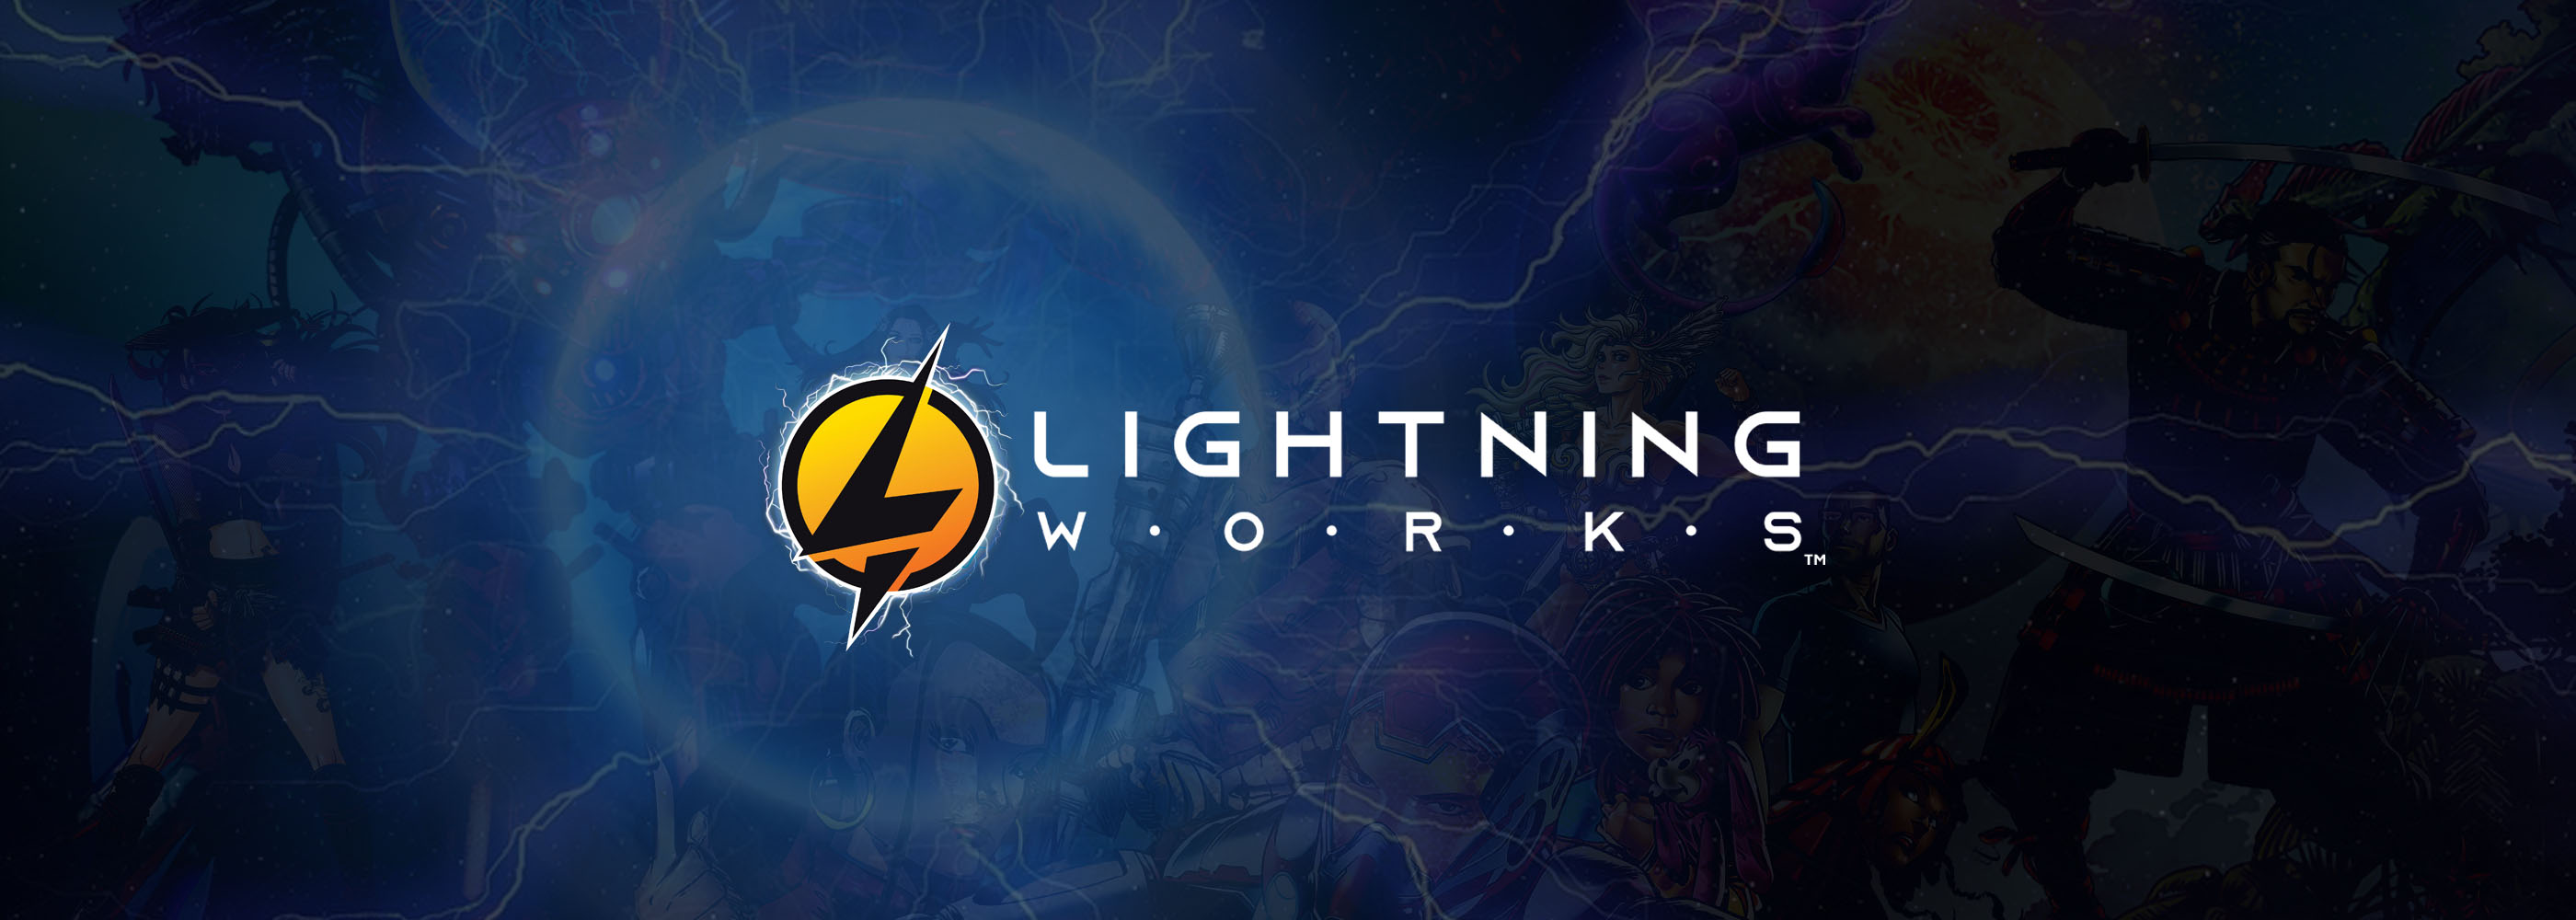 Lightningworks7 横幅